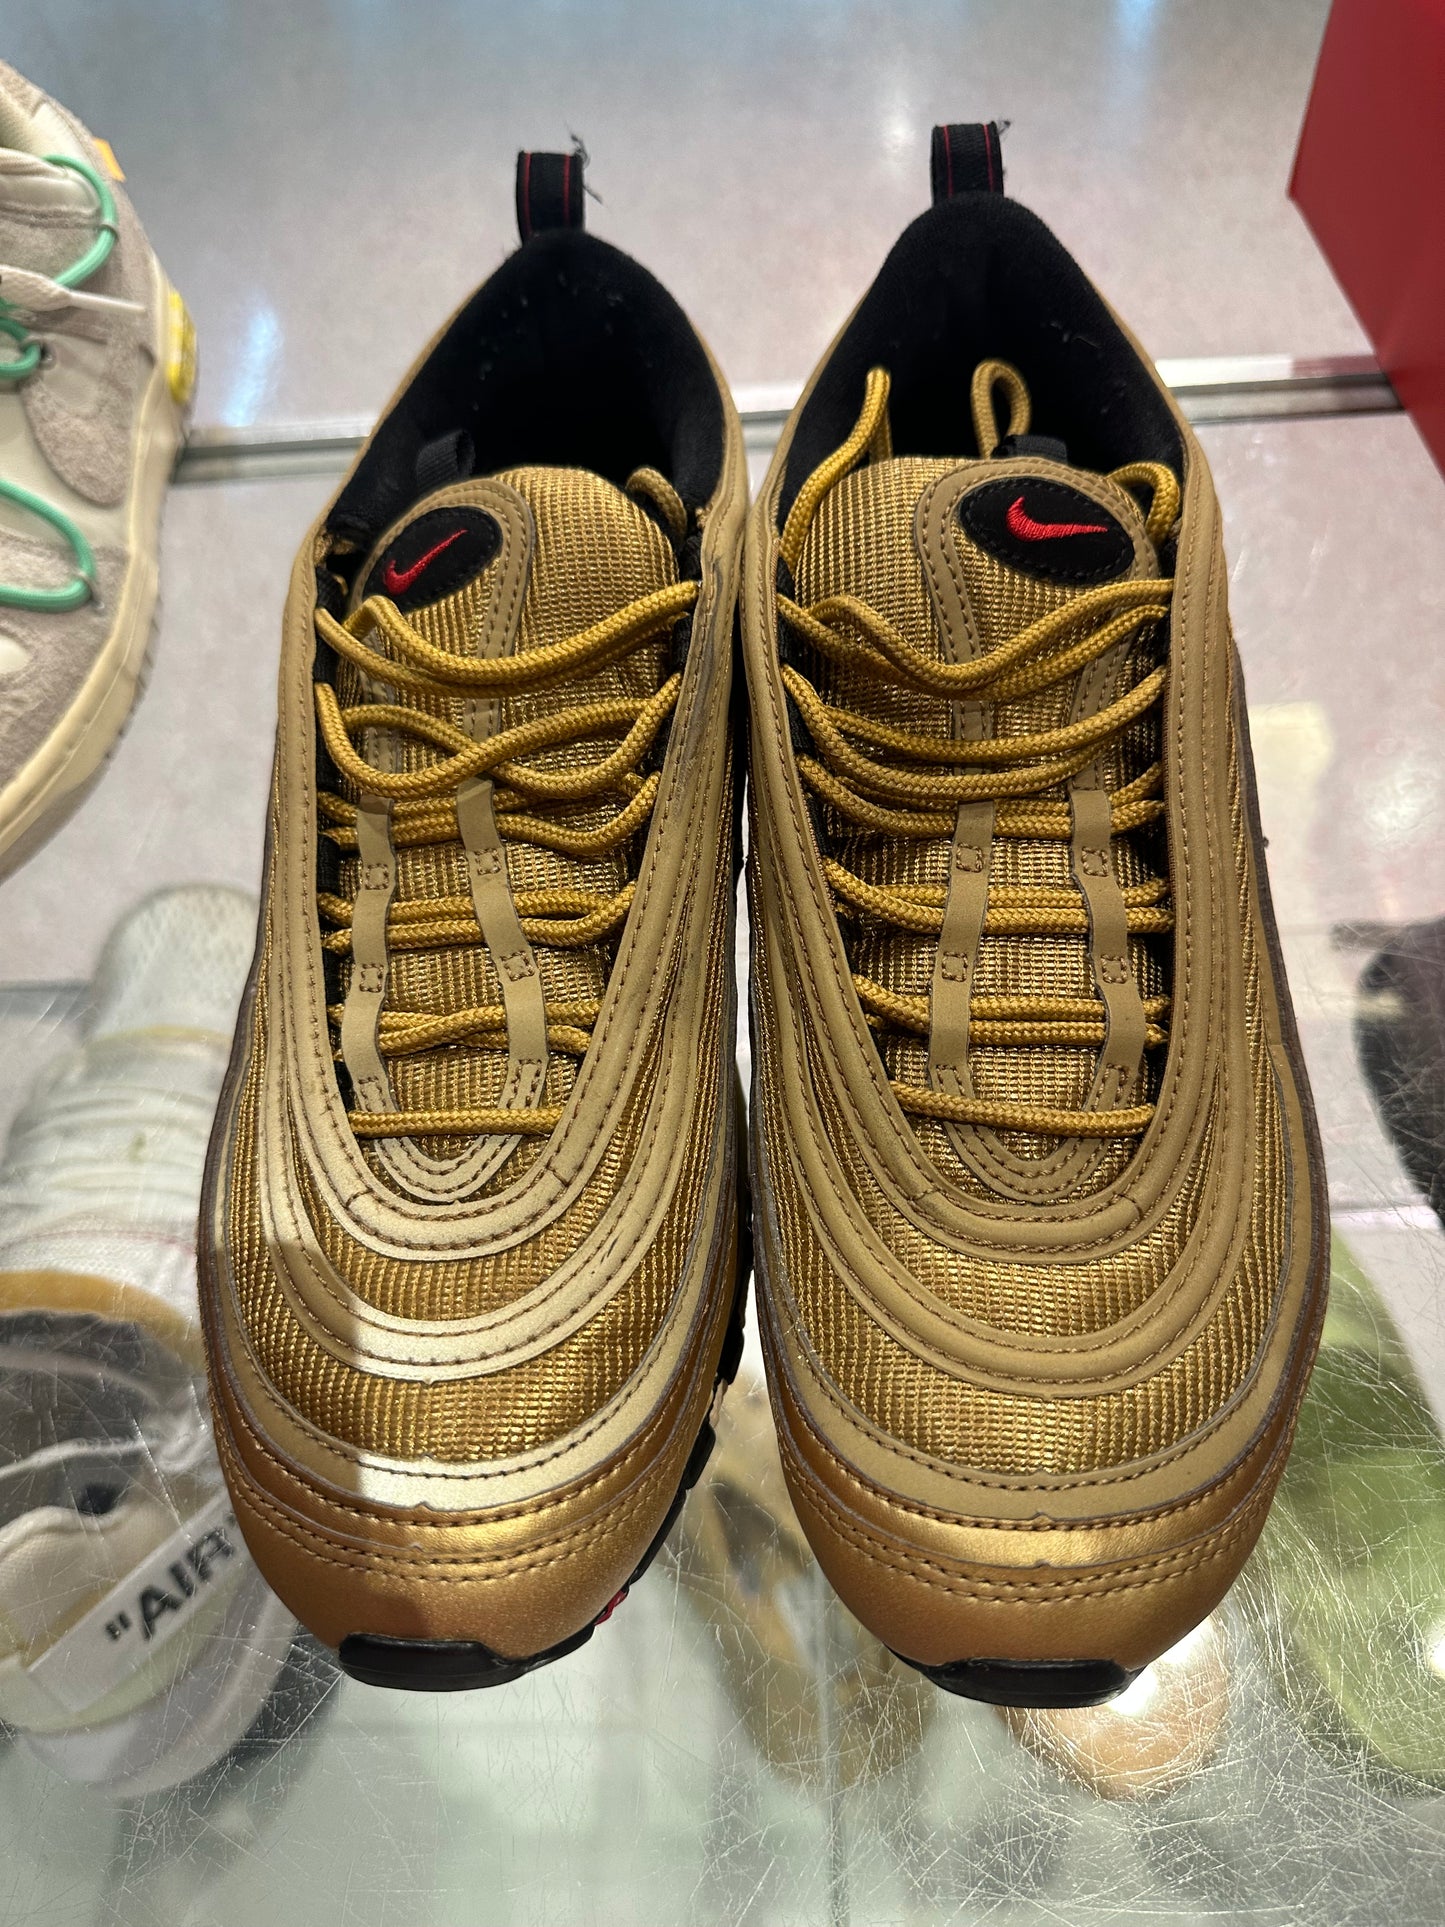 Size 9 Air Max 97 “Metallic Gold” (Mall)